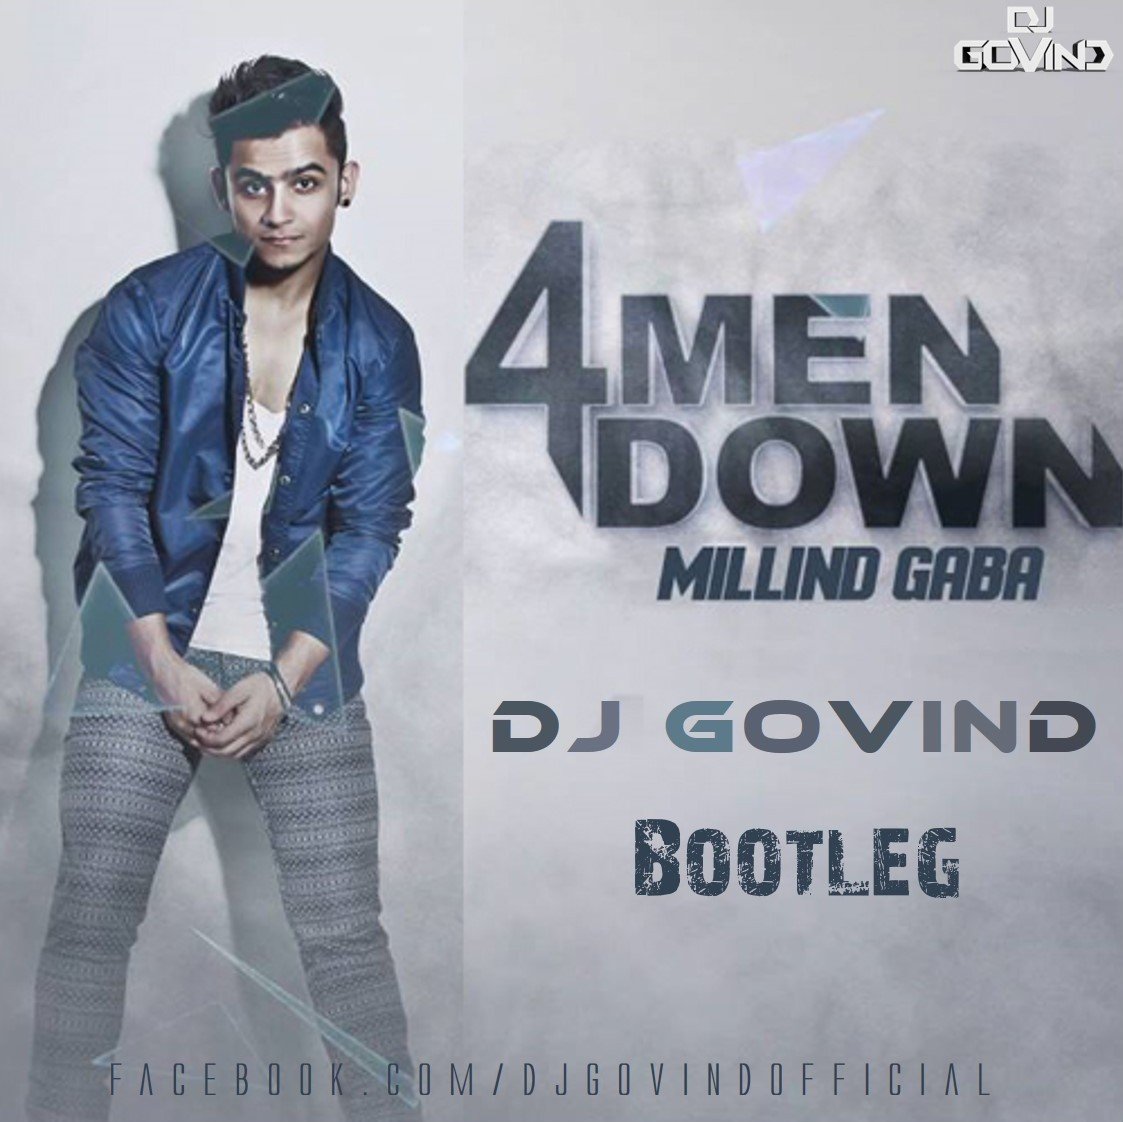 4 Men Down ( Millind Gaba ) - DJ Govind Bootleg